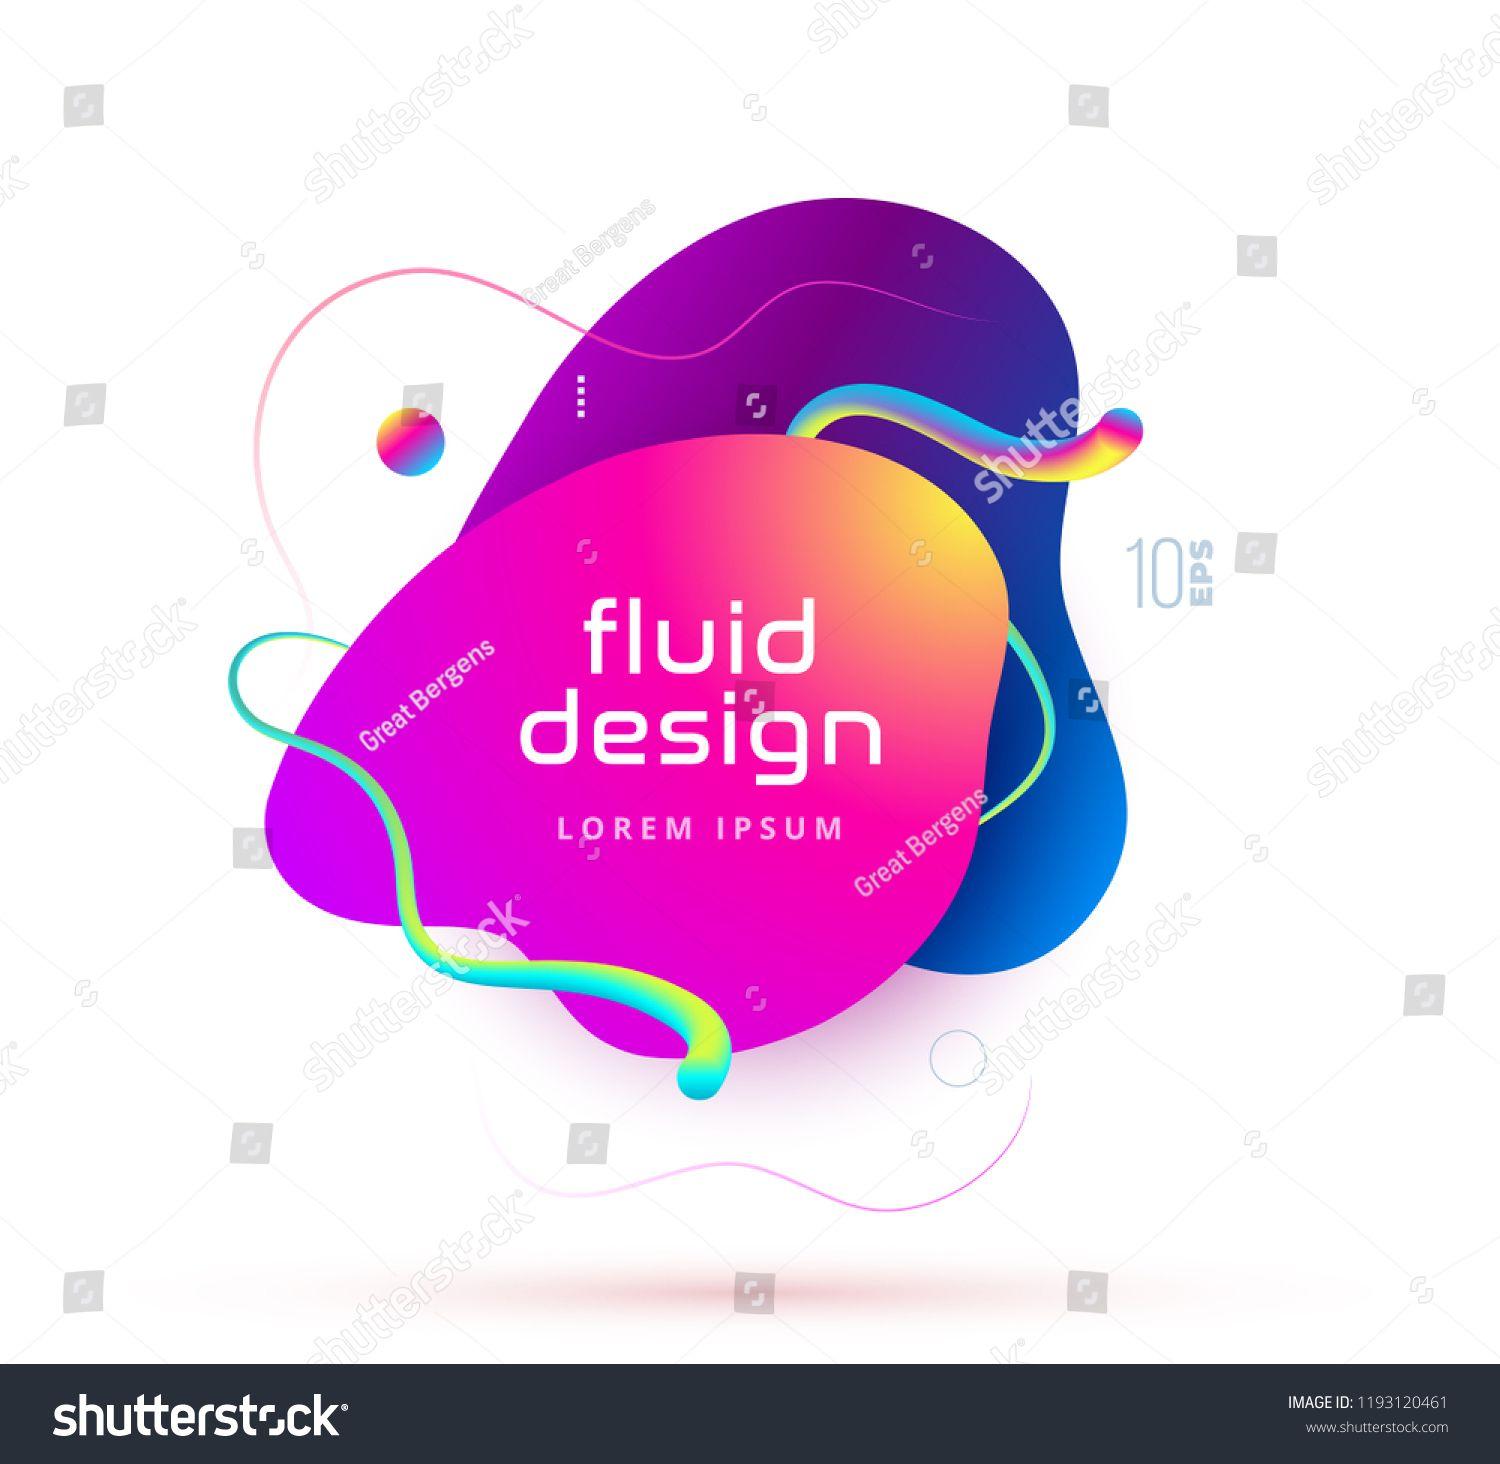 Liquid Circle Logo - Organic design of liquid color abstract geometric shapes. Fluid